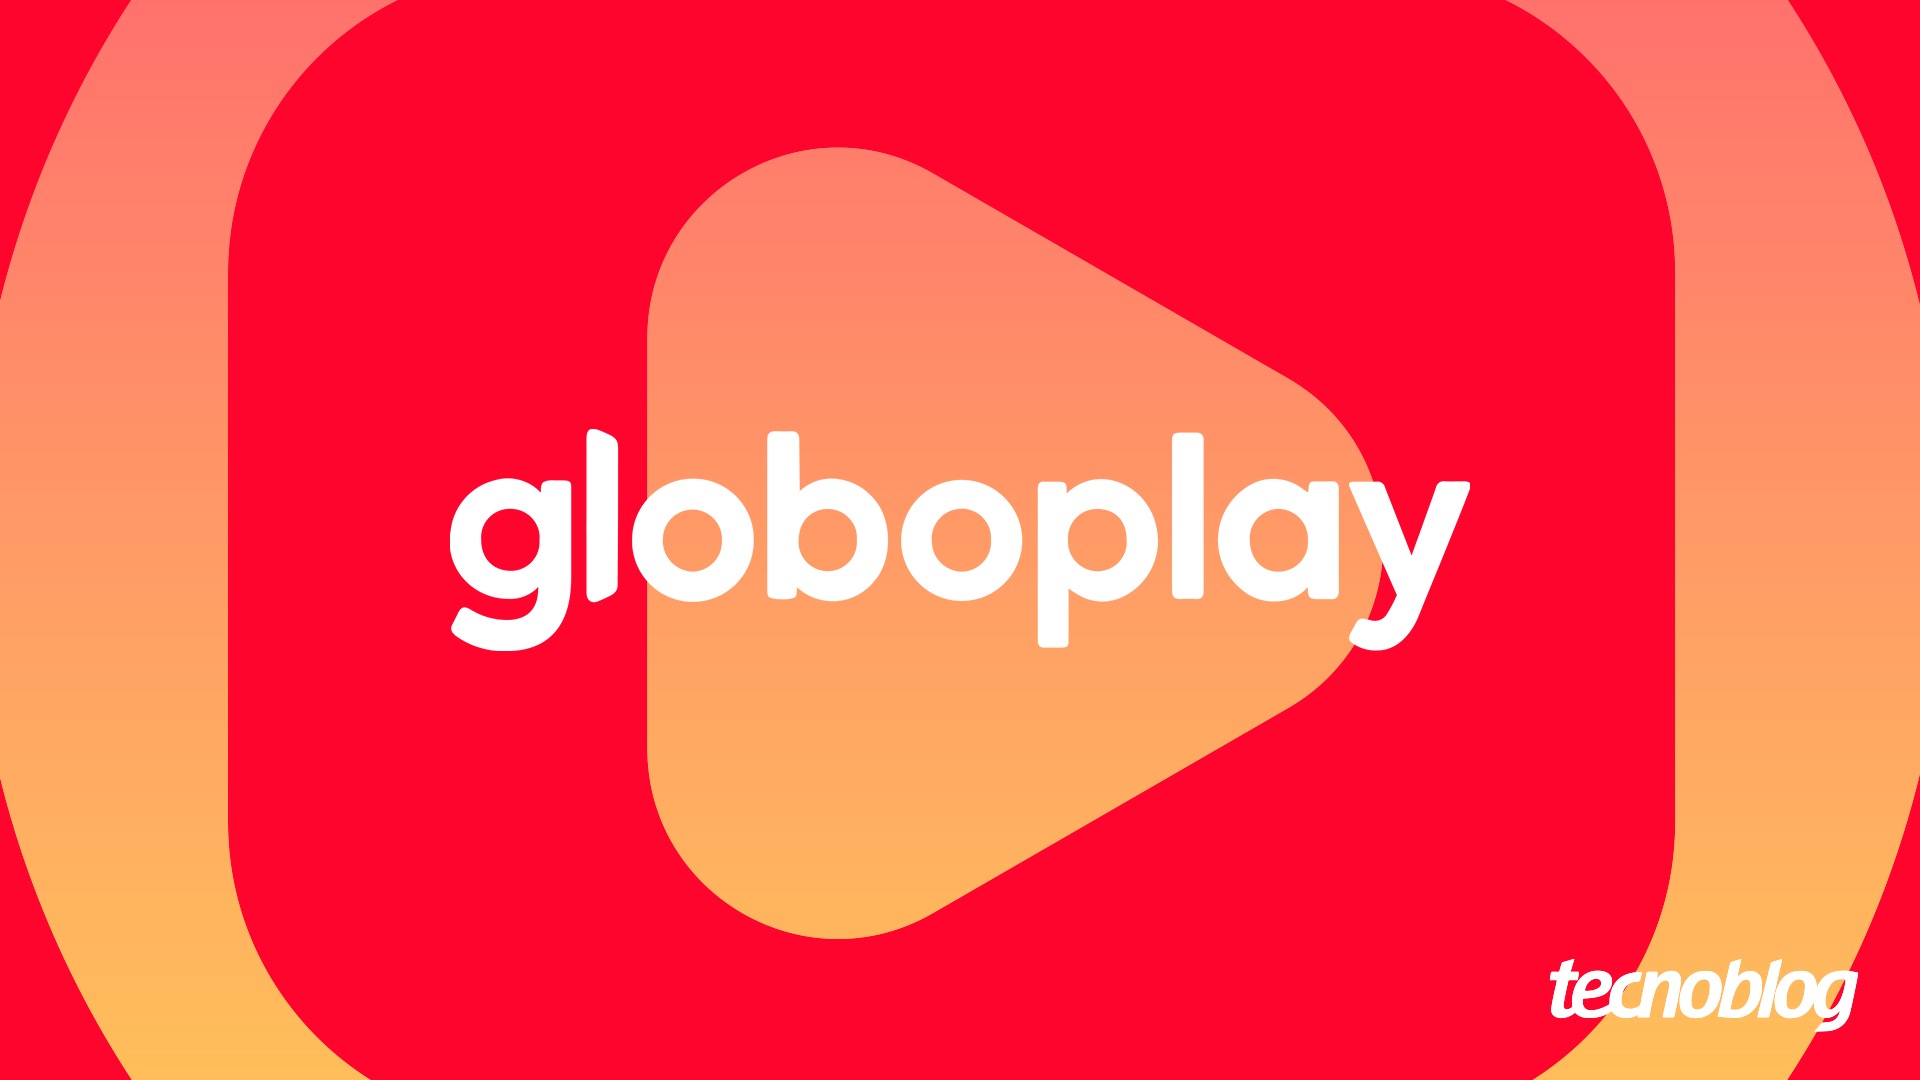 Globoplay e Starzplay anunciam parceria